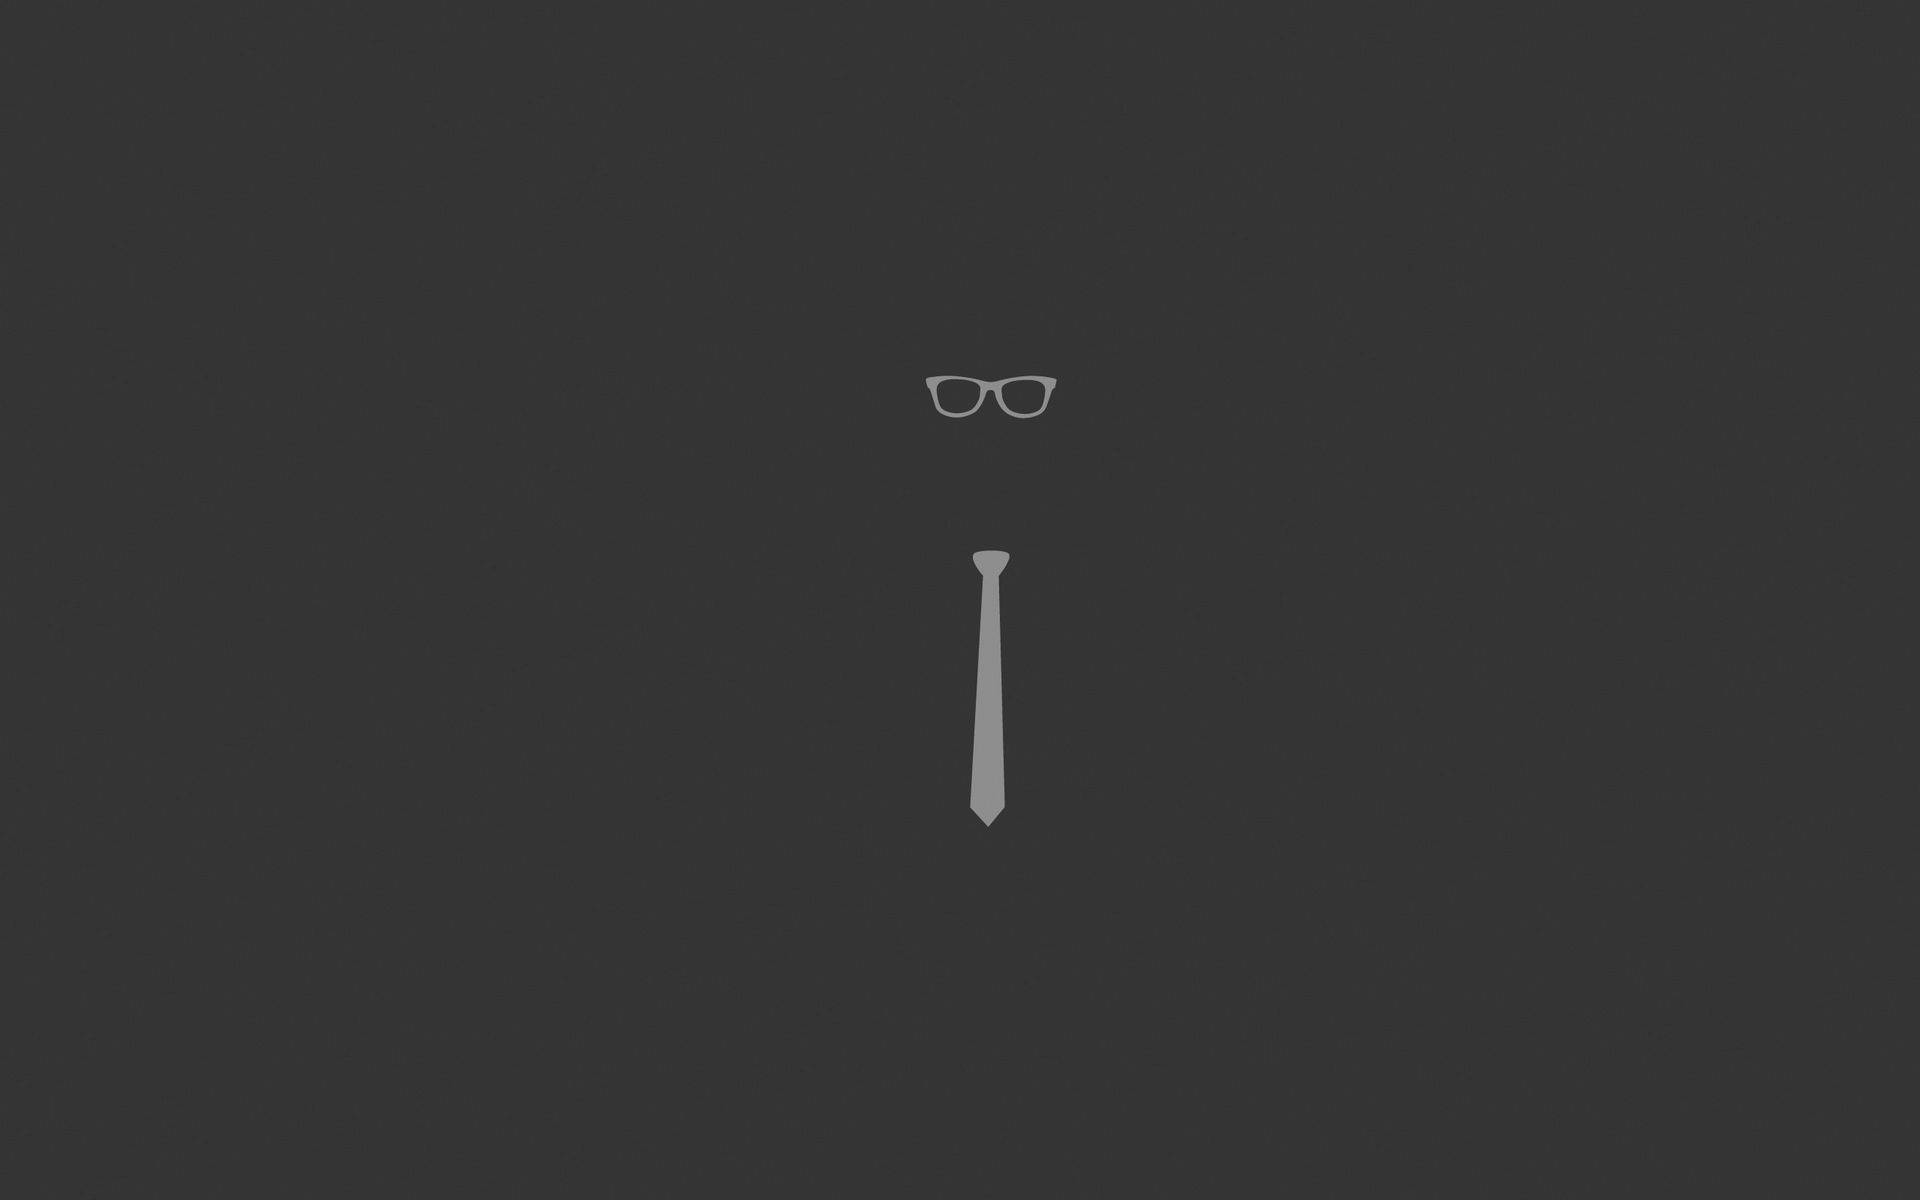 Minimalist Glasses And Tie Vector